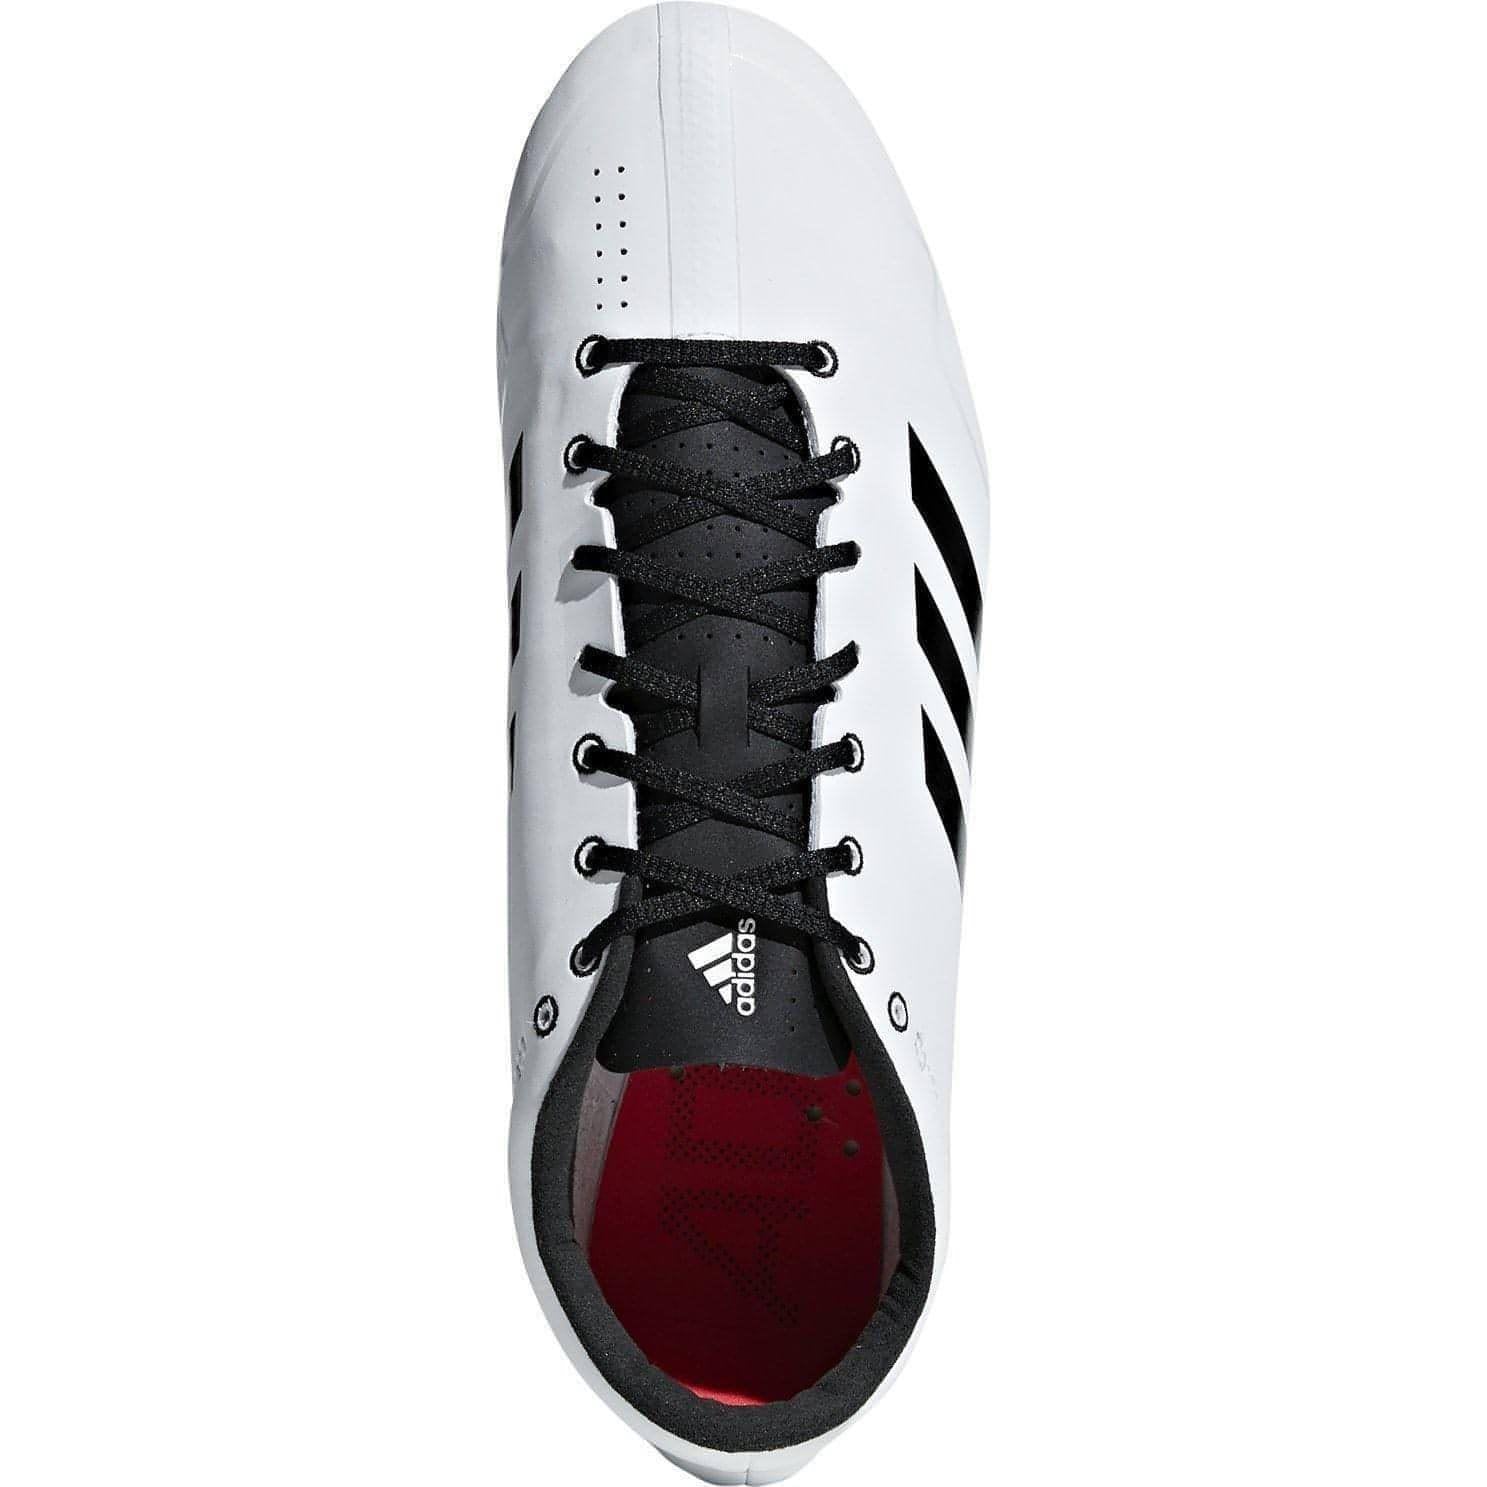 adidas Adizero Prime SP Running Spikes - White - Start Fitness